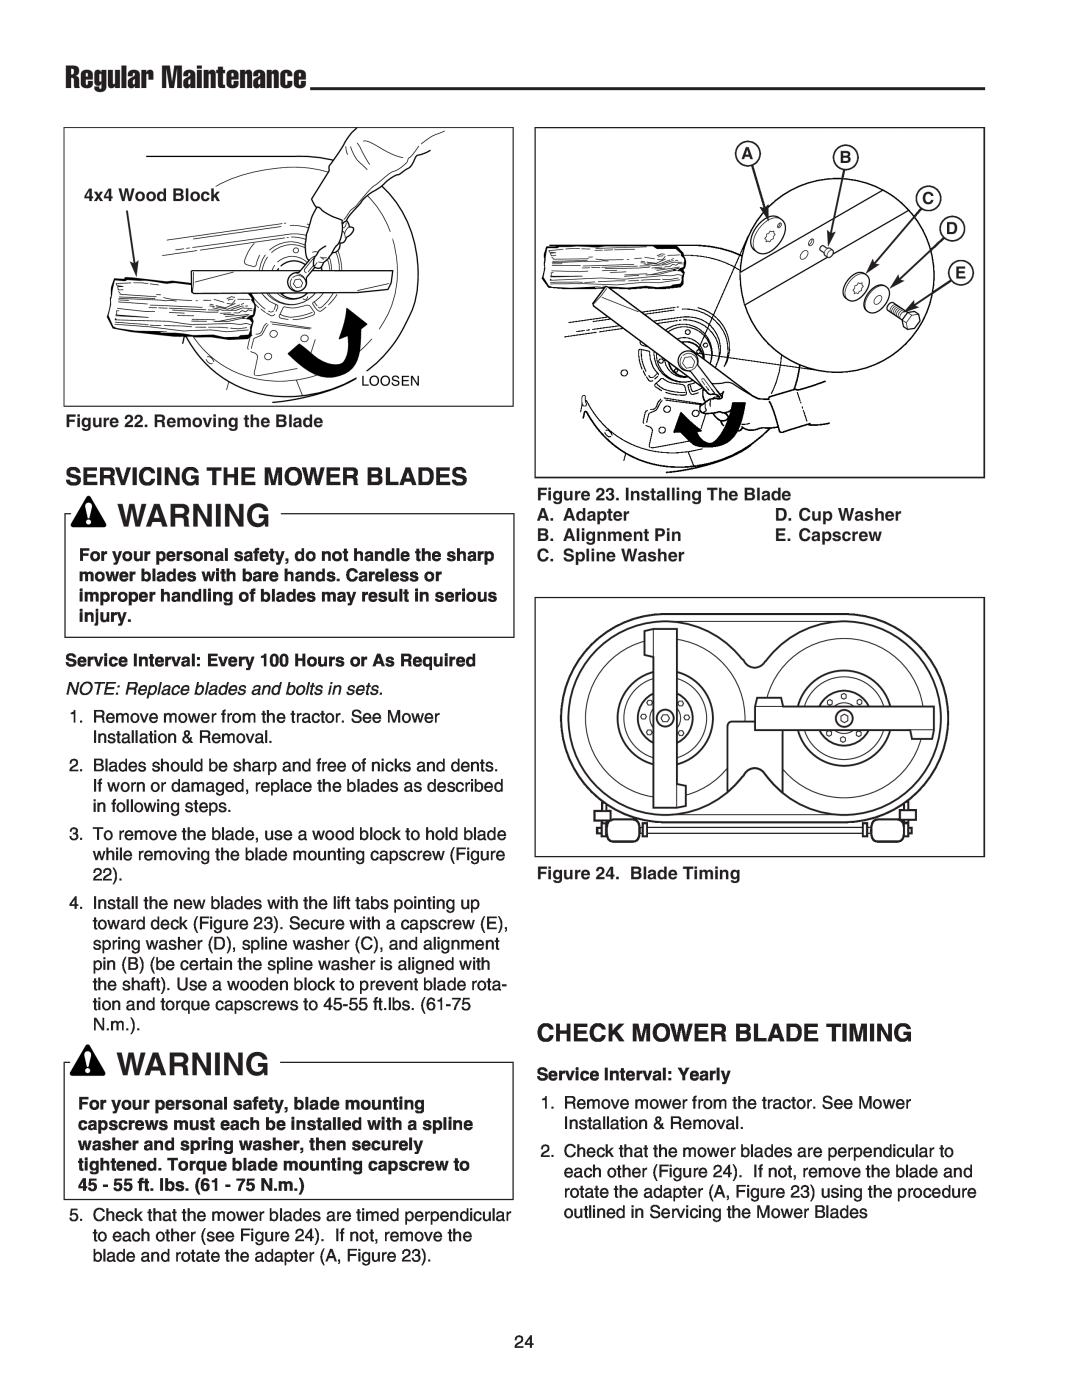 Snapper 2400 XL manual Servicing The Mower Blades, Check Mower Blade Timing, Regular Maintenance 